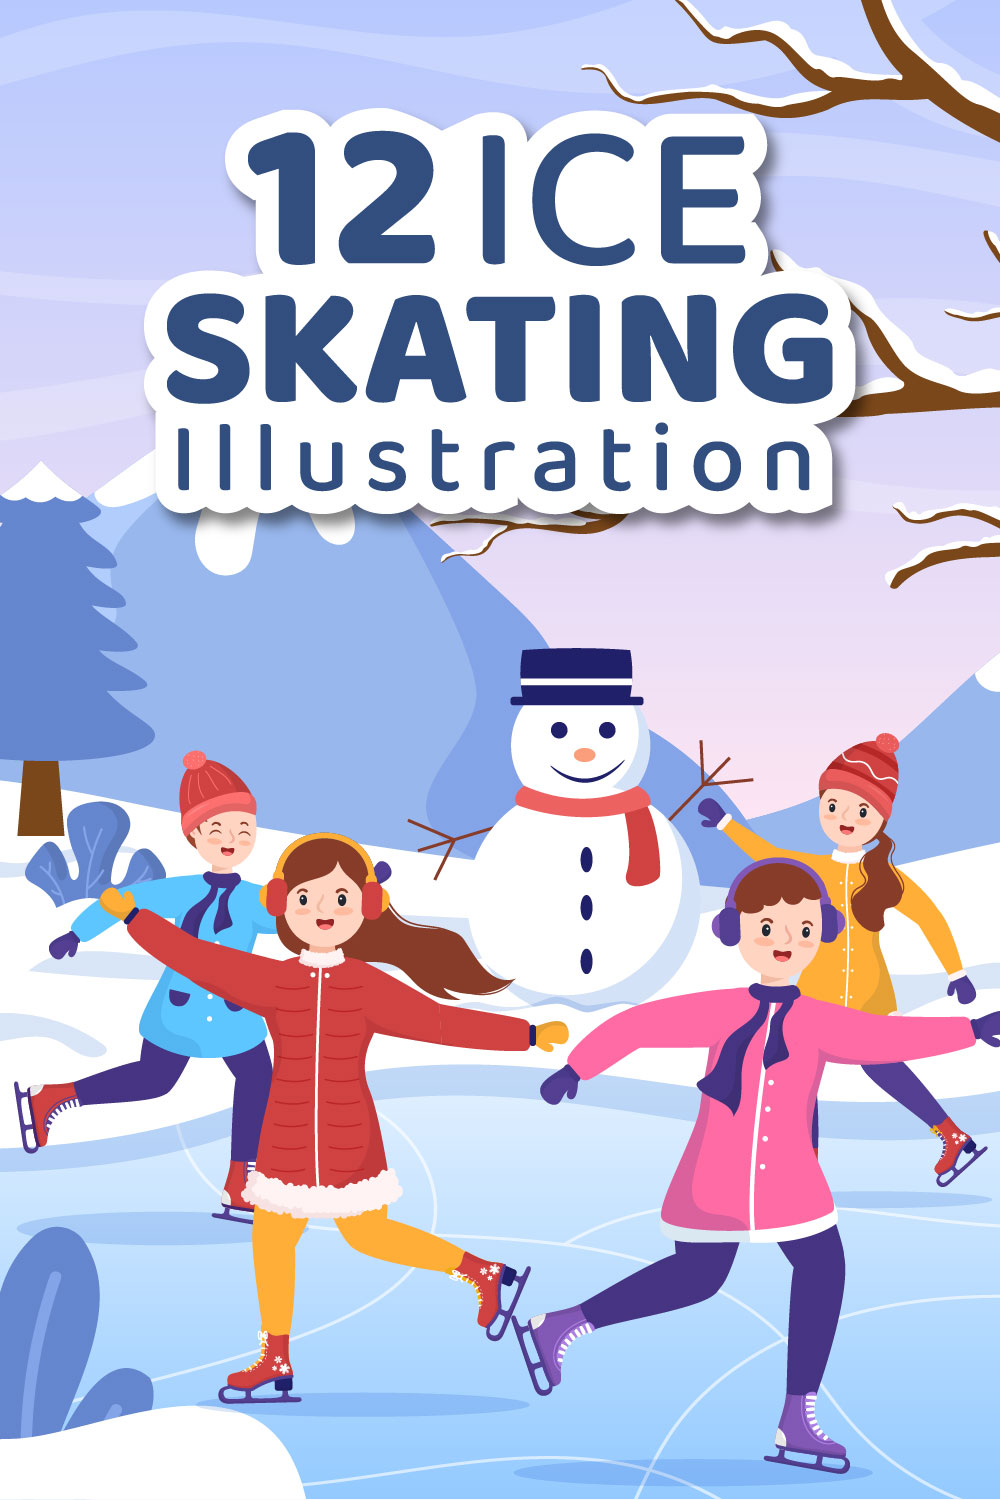 12 Ice Skating Design Illustration Pinterest Image.